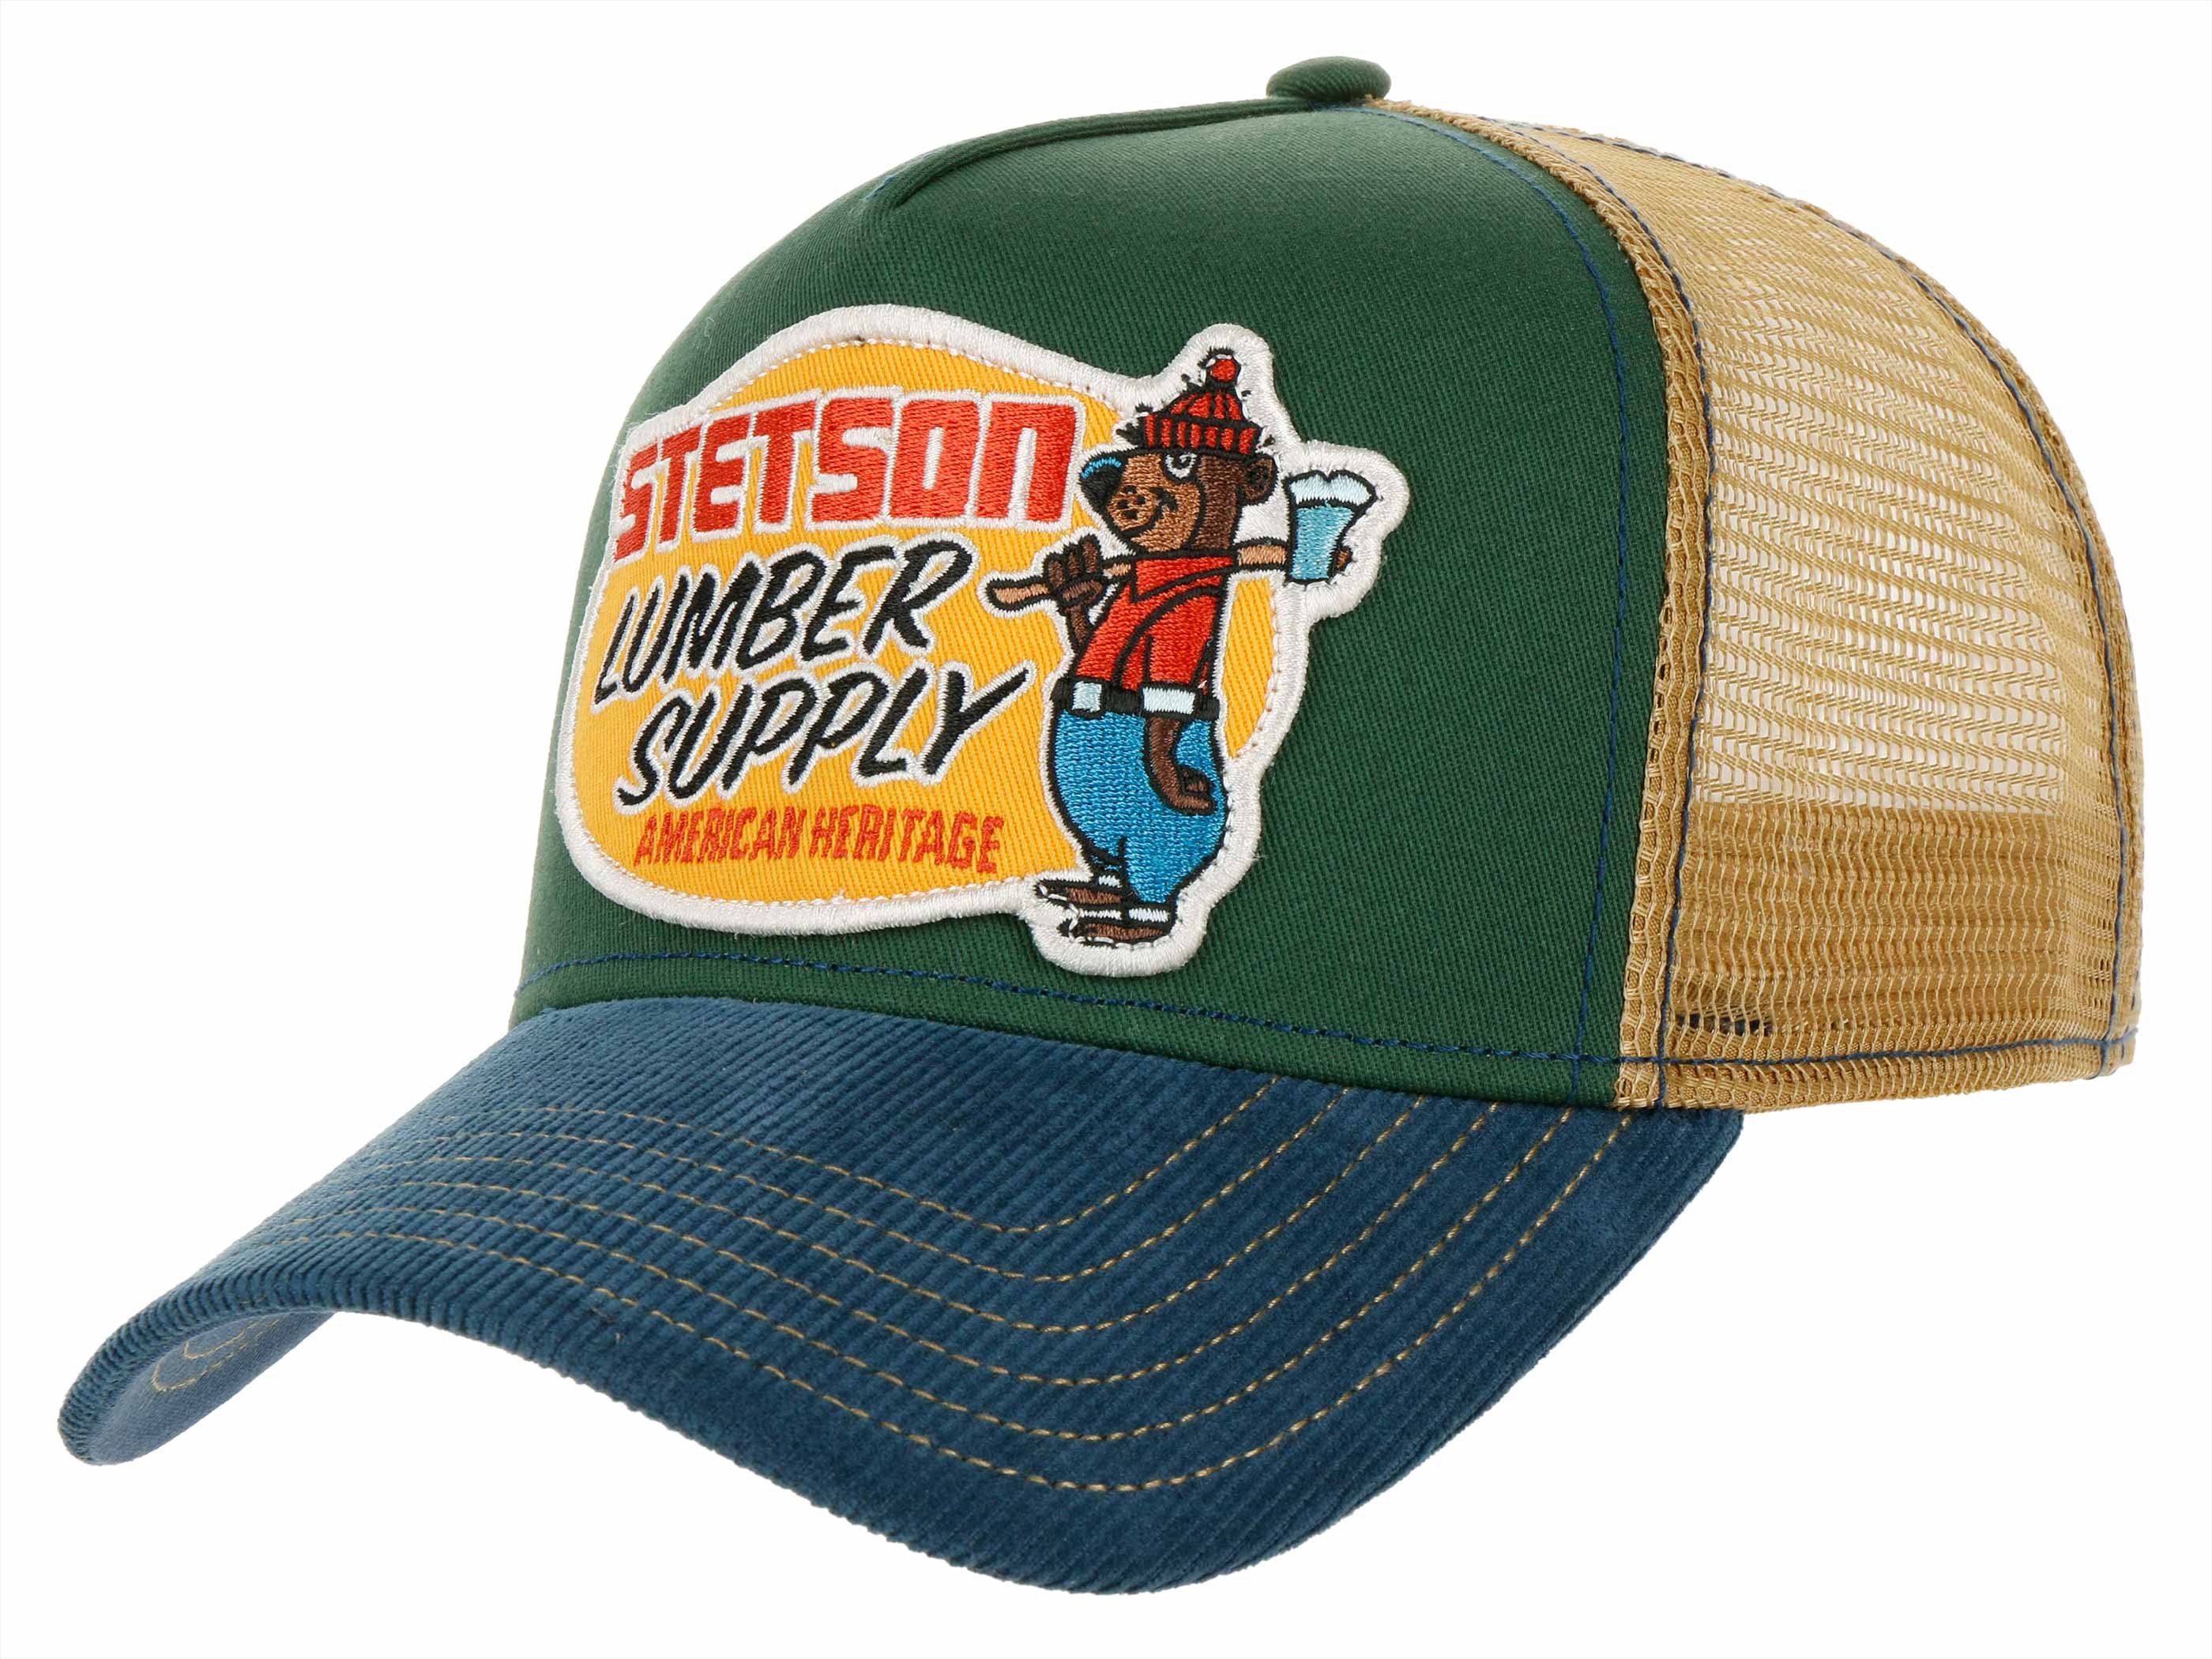 Stetson Trucker Cap Lumber Supply Mesh Baseball Cap